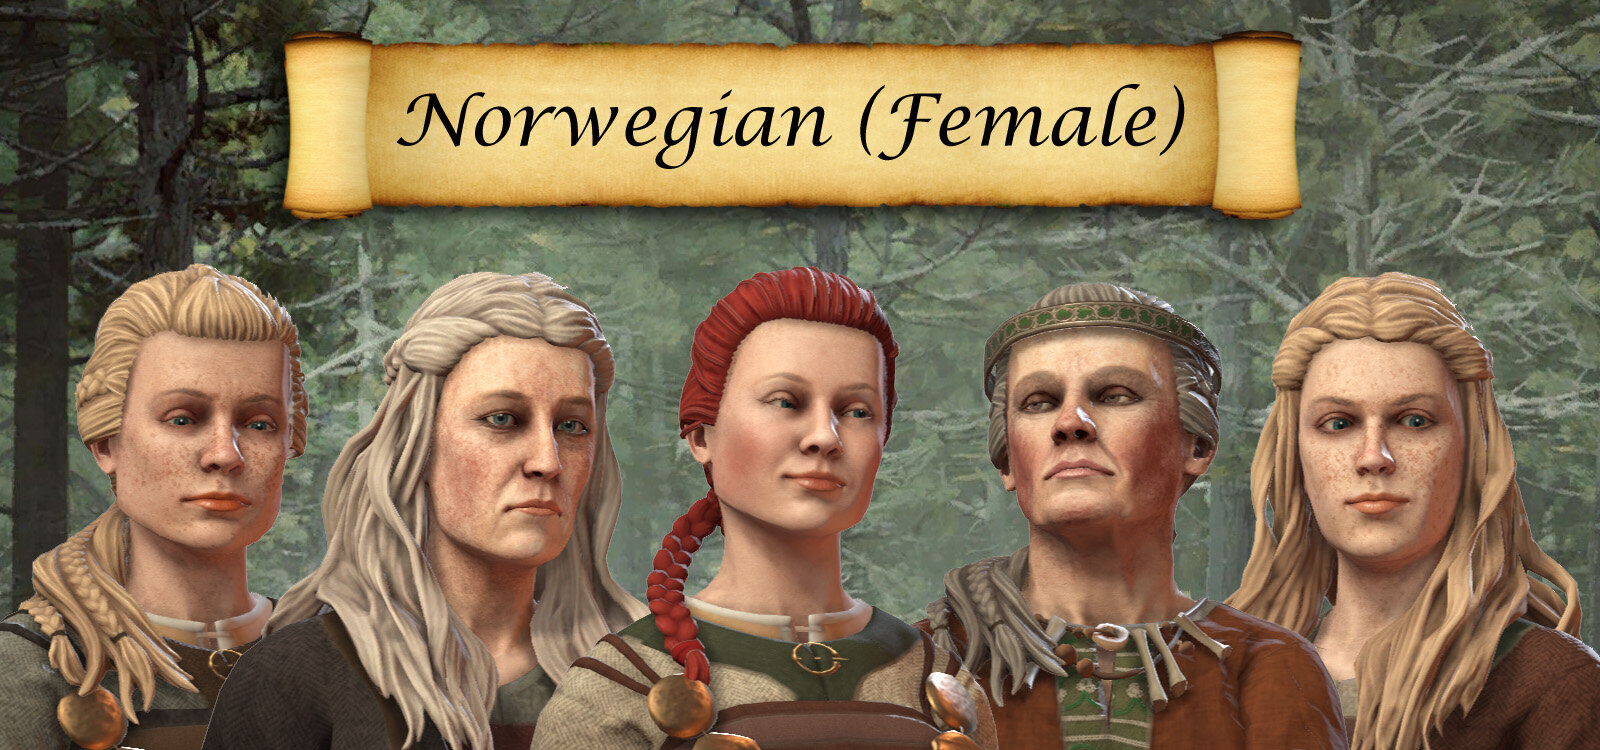 norwegian_female.jpg.a0cf9b2701a8ffc3a560d6a1146246a2.jpg